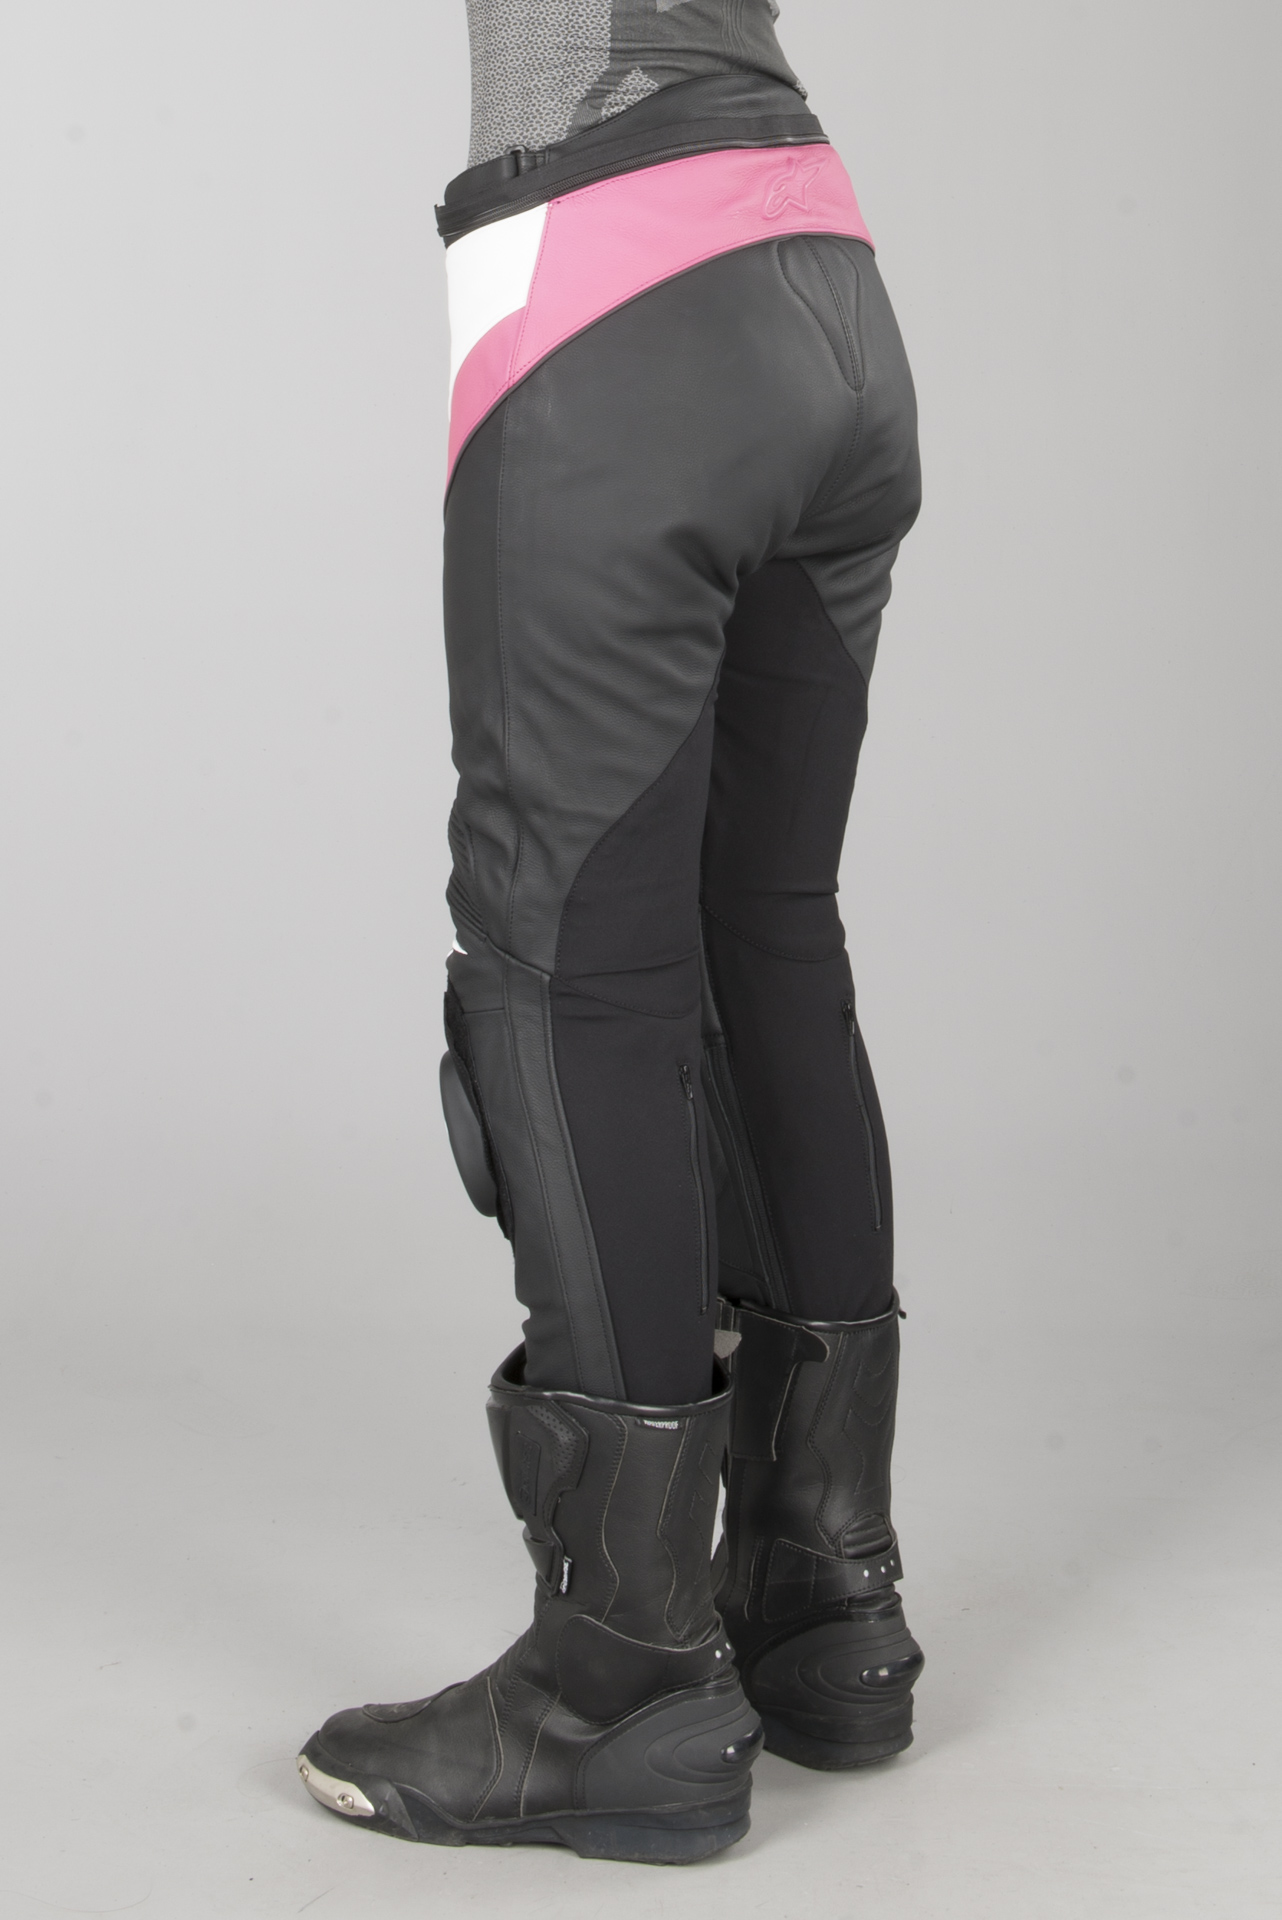 Alpinestars Stella Fluid Chaser Women's MX Pants Black-Pink - Now 5%  Savings | 24MX